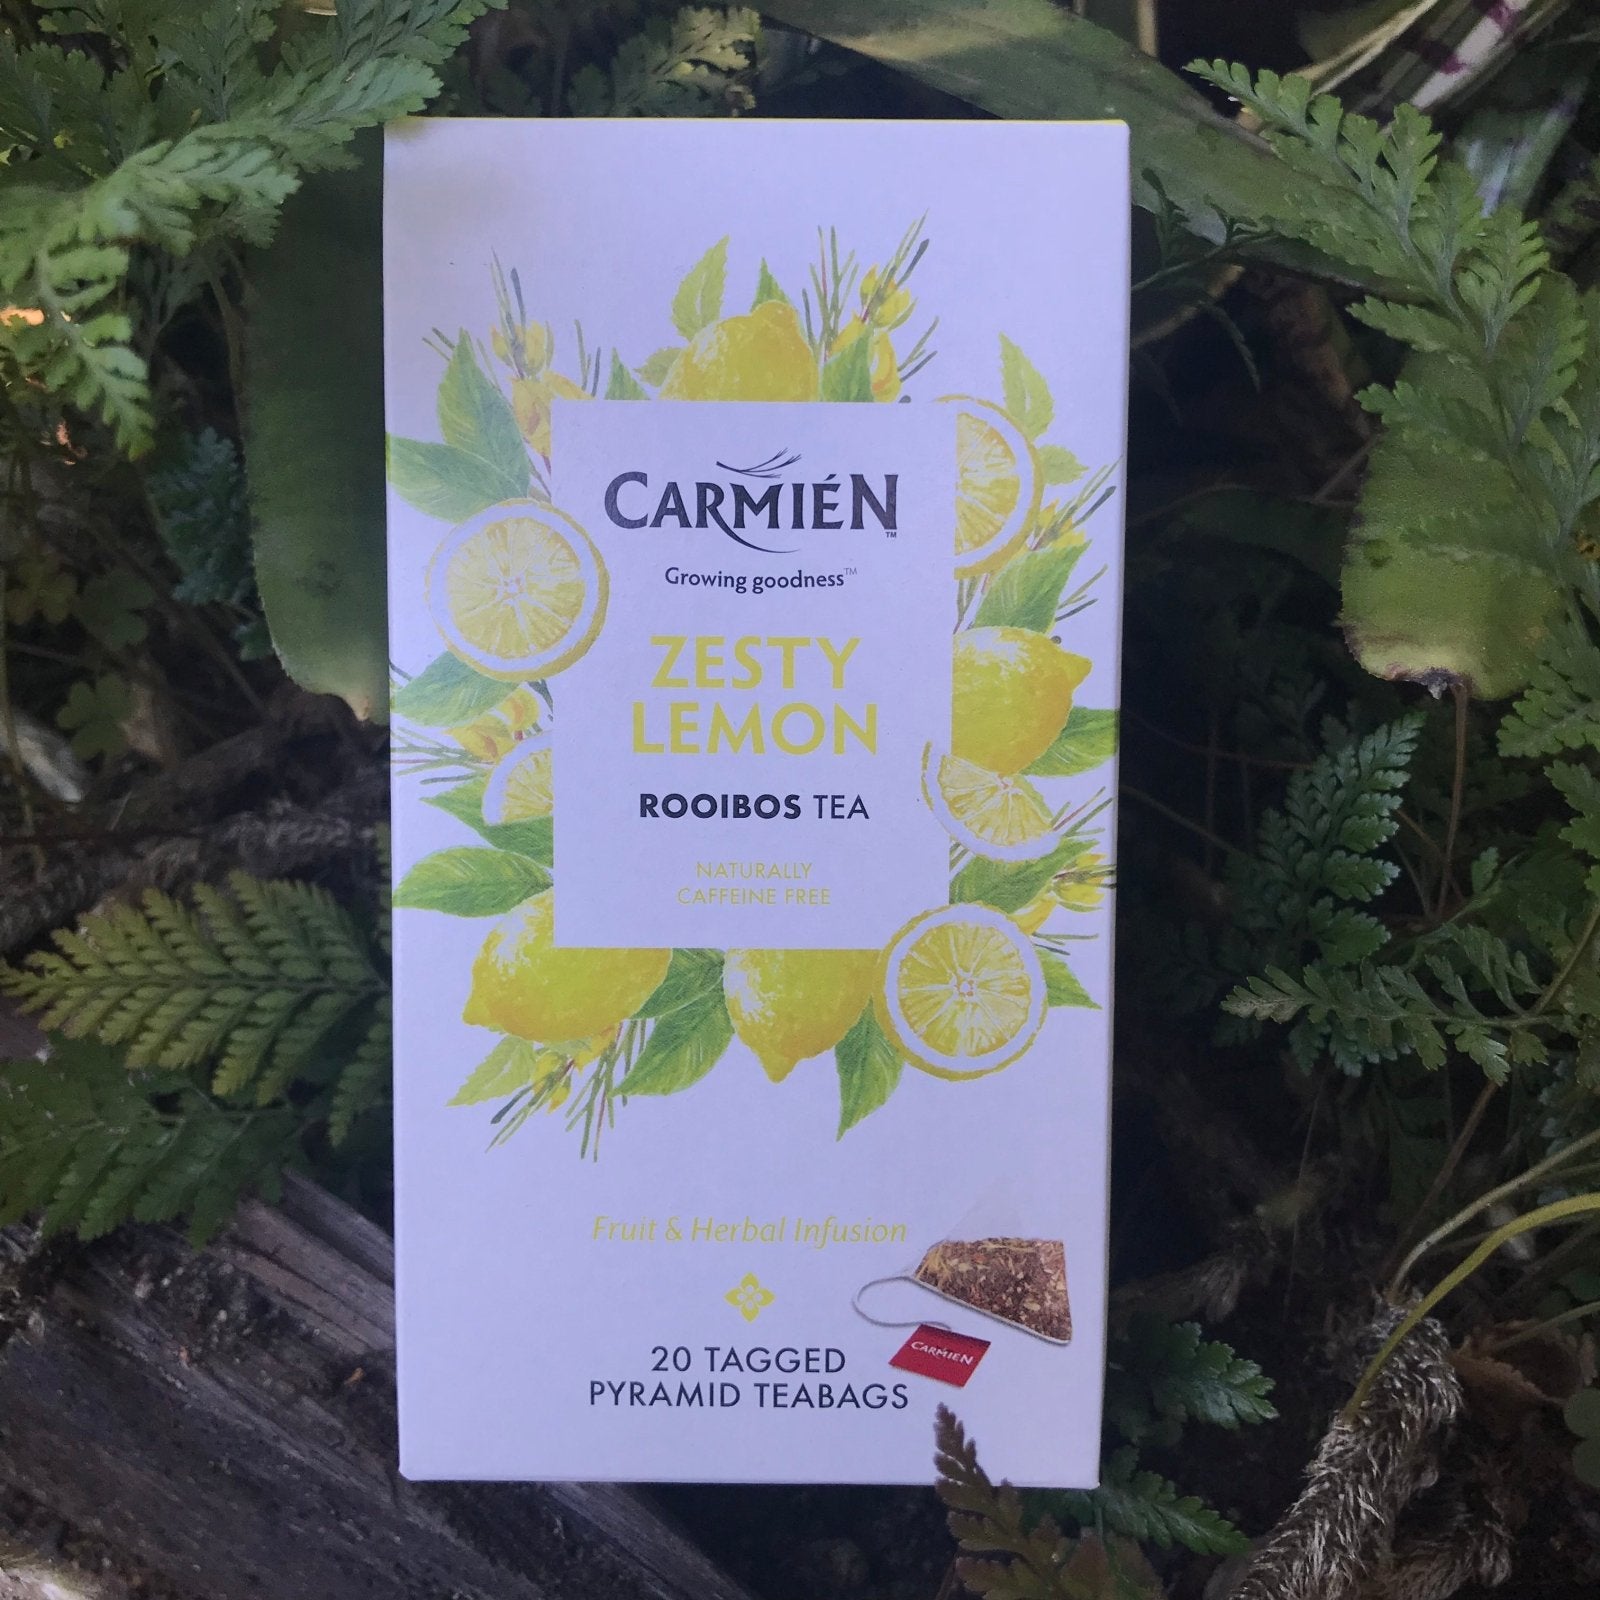 Carmien Zesty Lemon Rooibos Tea (20 tagged pyramid teabags) - The Deli